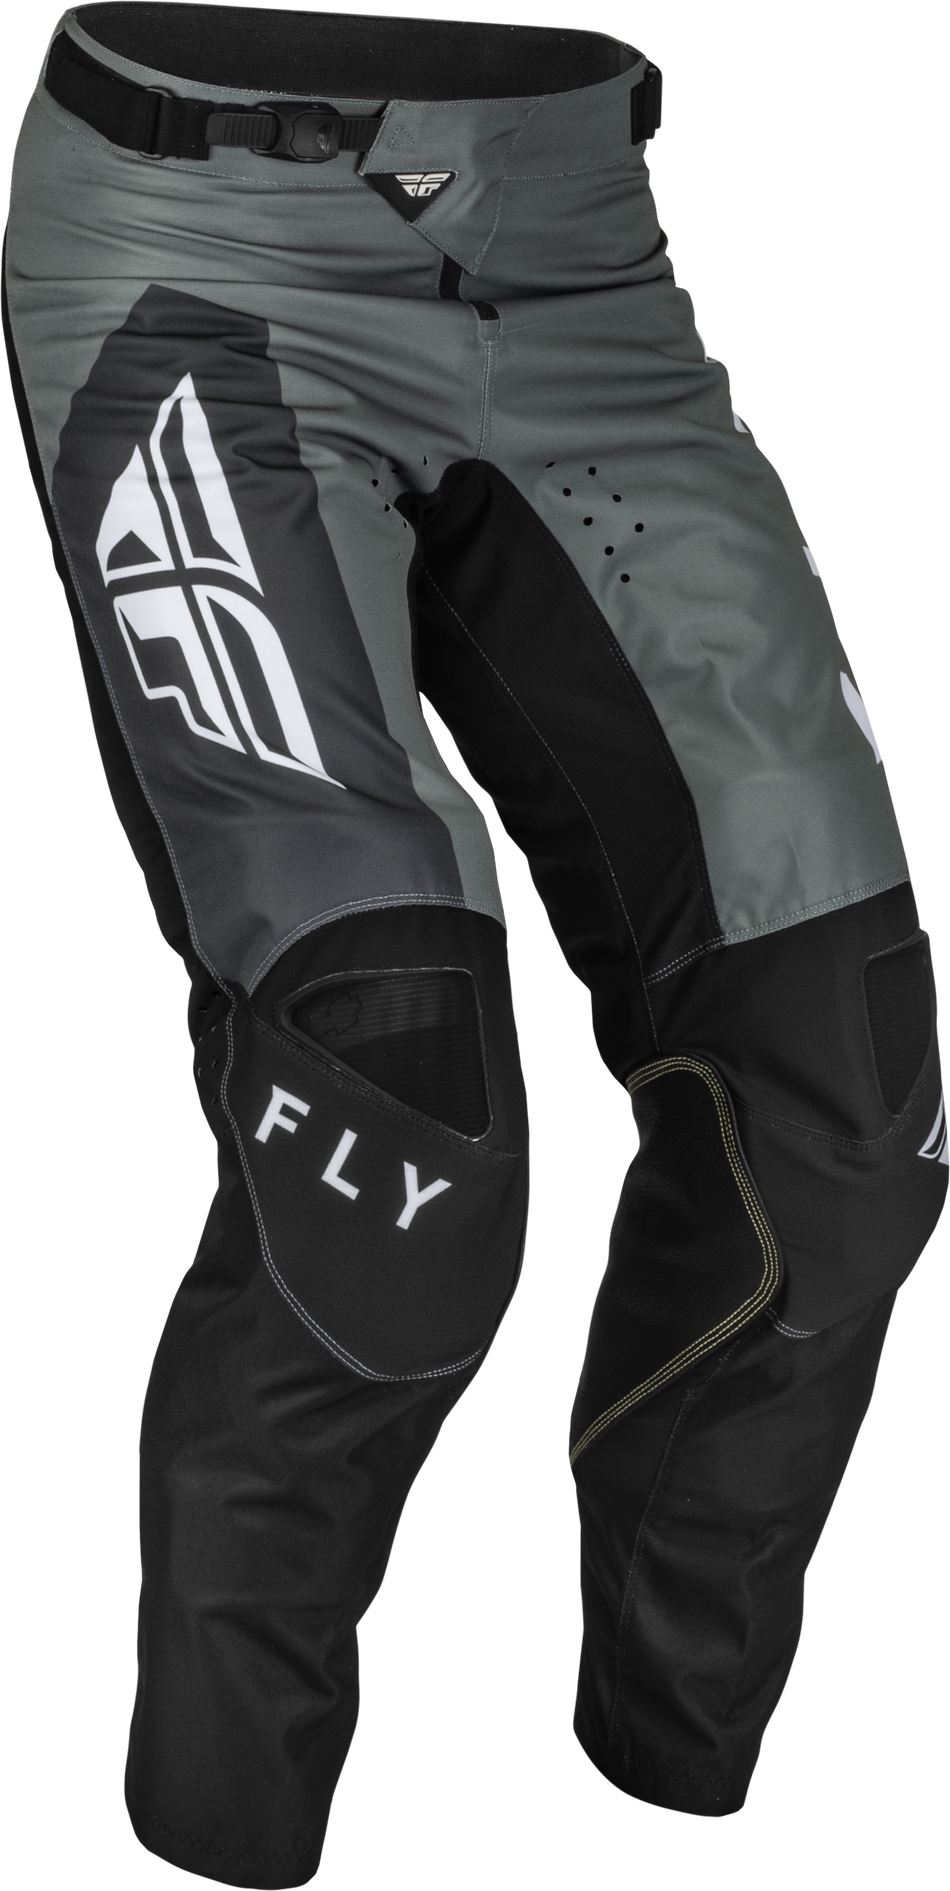 FLY RACING Kinetic Jet Pants Grey/Dark Grey/Black Sz 38 376-53338